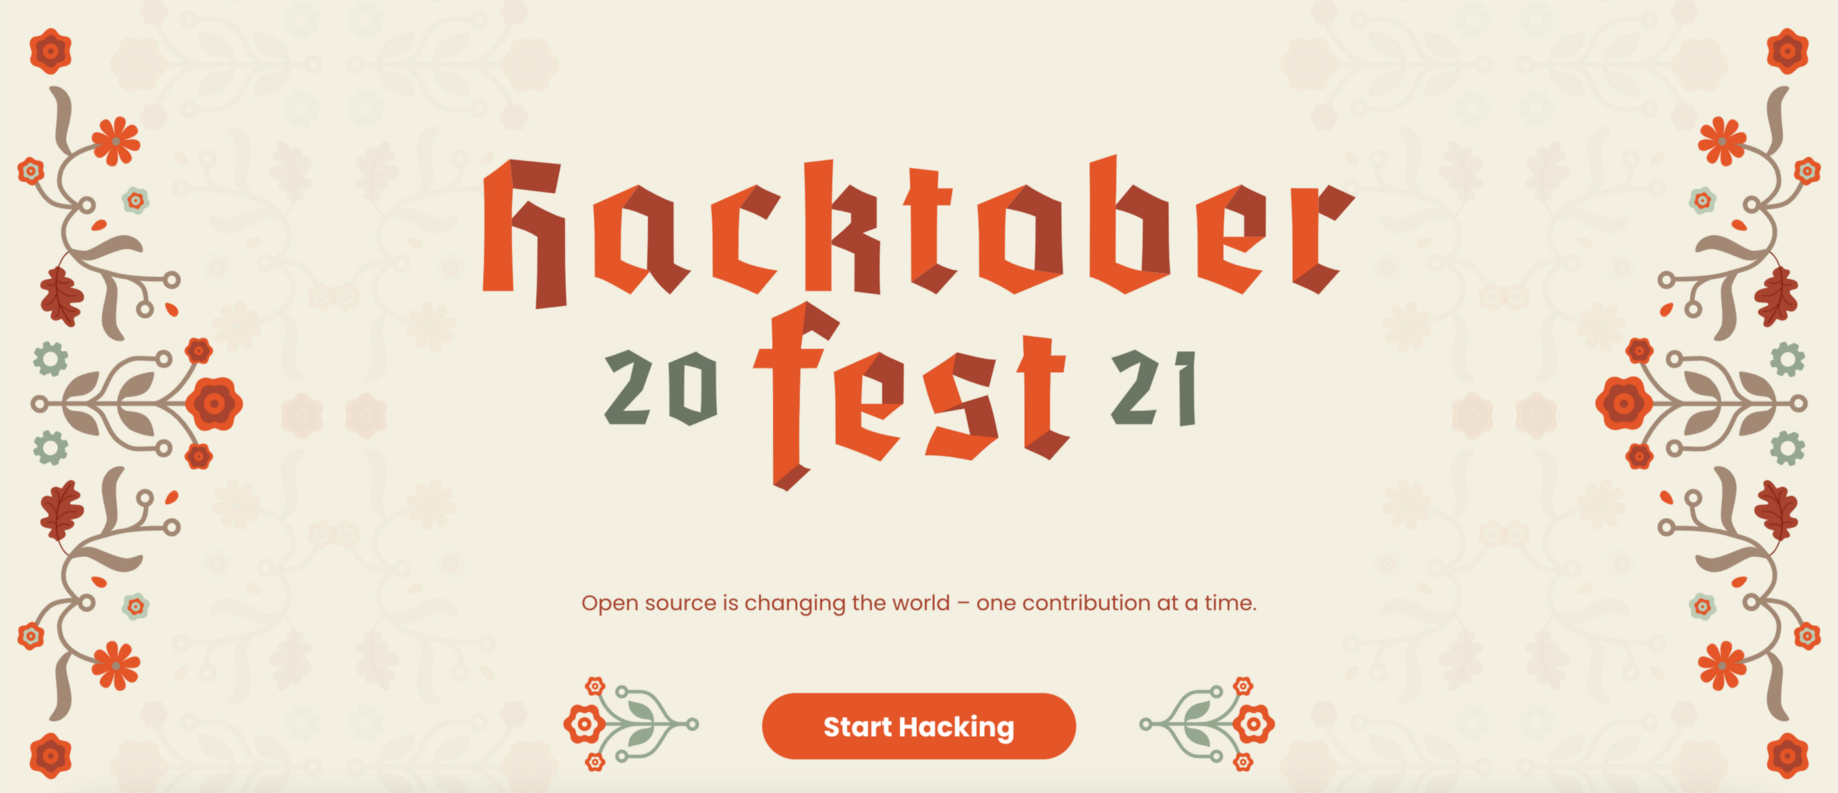 HacktoberFest2021